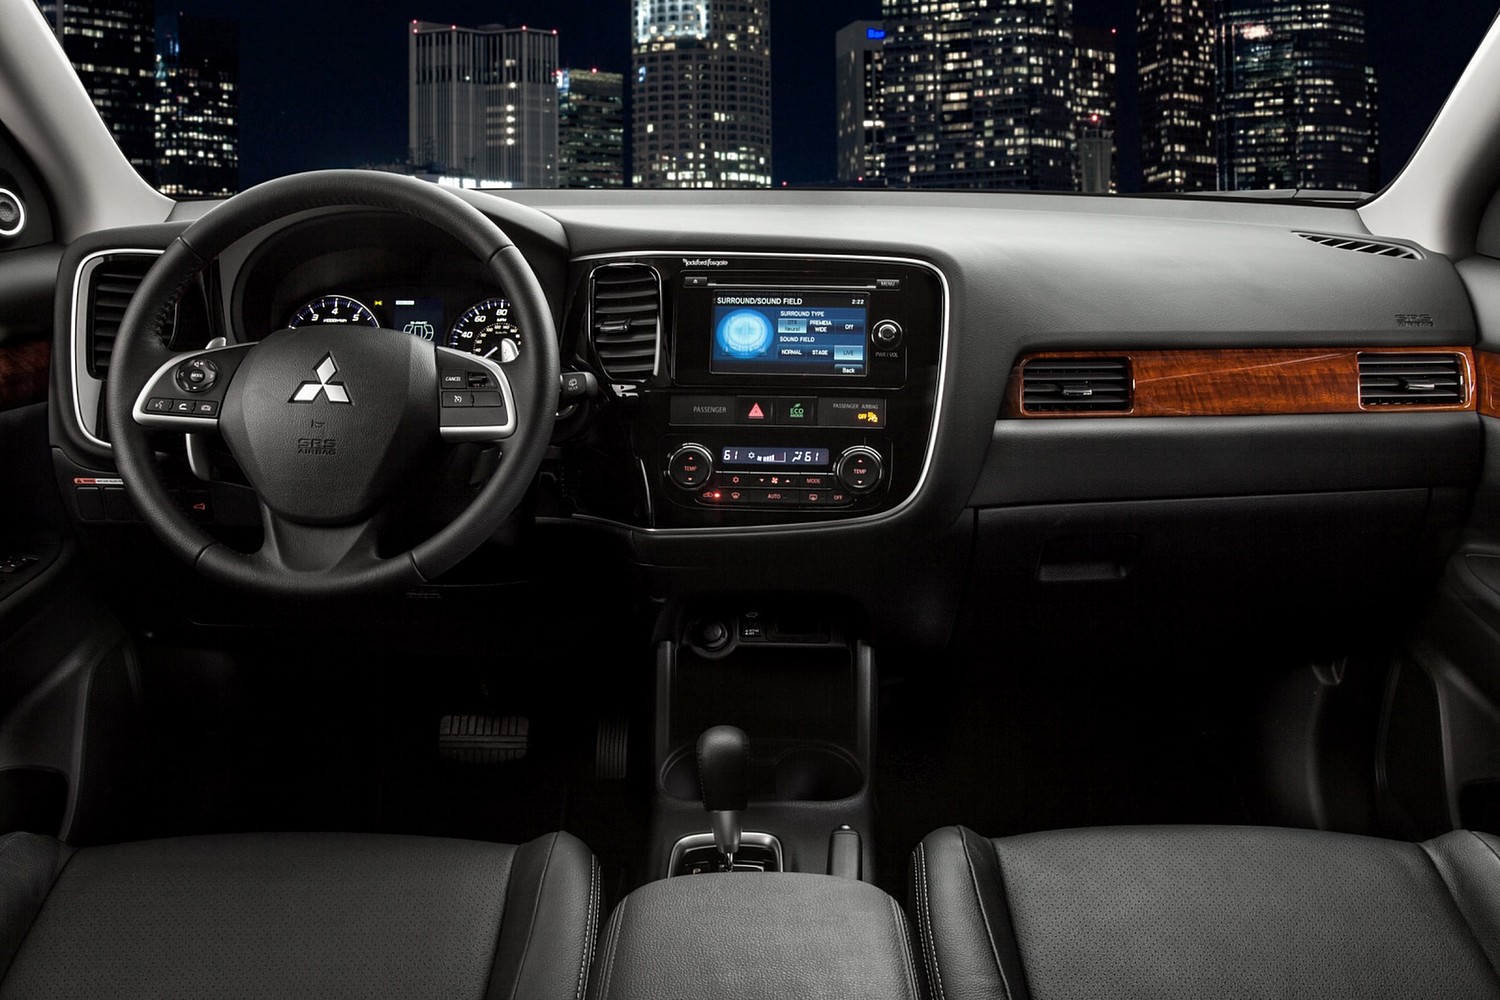 Mitsubishi Outlander GT 4dr SUV Interior (2014 model year shown)